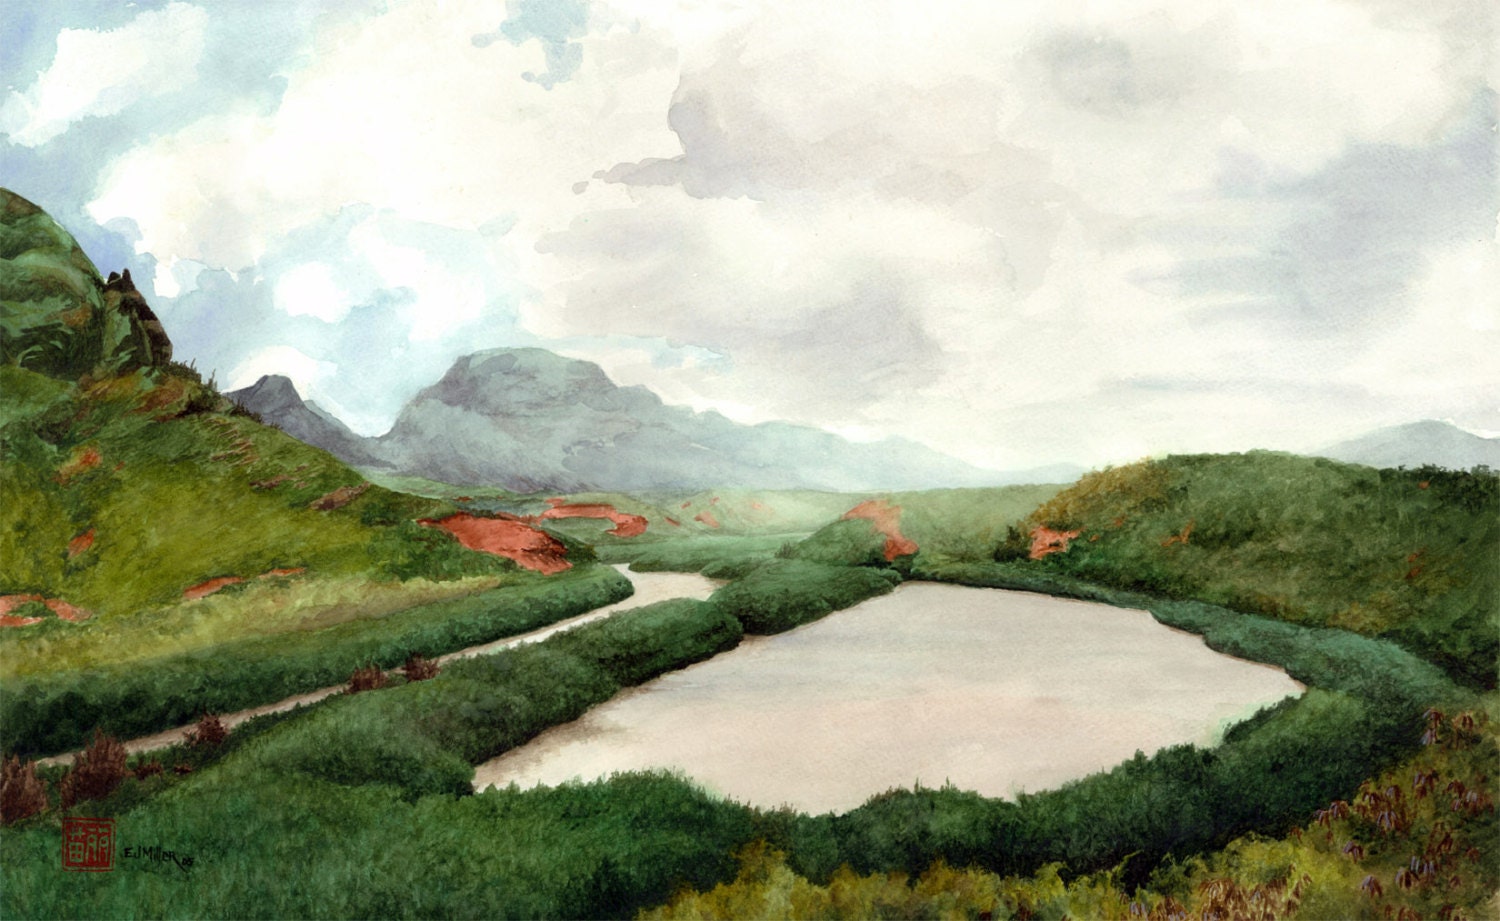 Kauai Art Print Mist at Alekoko Fishpond Hawaii Watercolor Landscape  Painting Print 